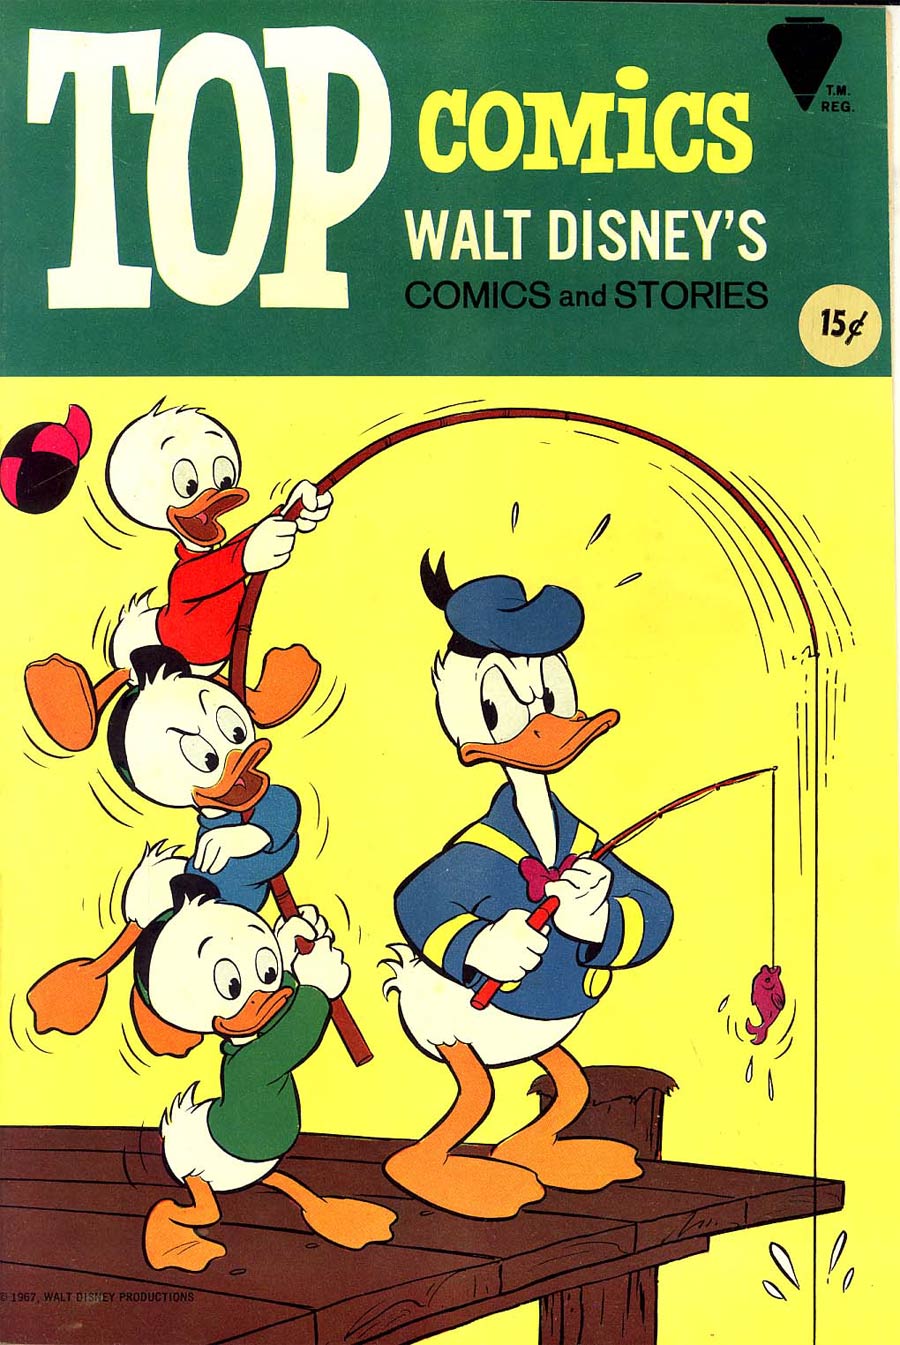 Top Comics #2 Walt Disneys Comics and Stories